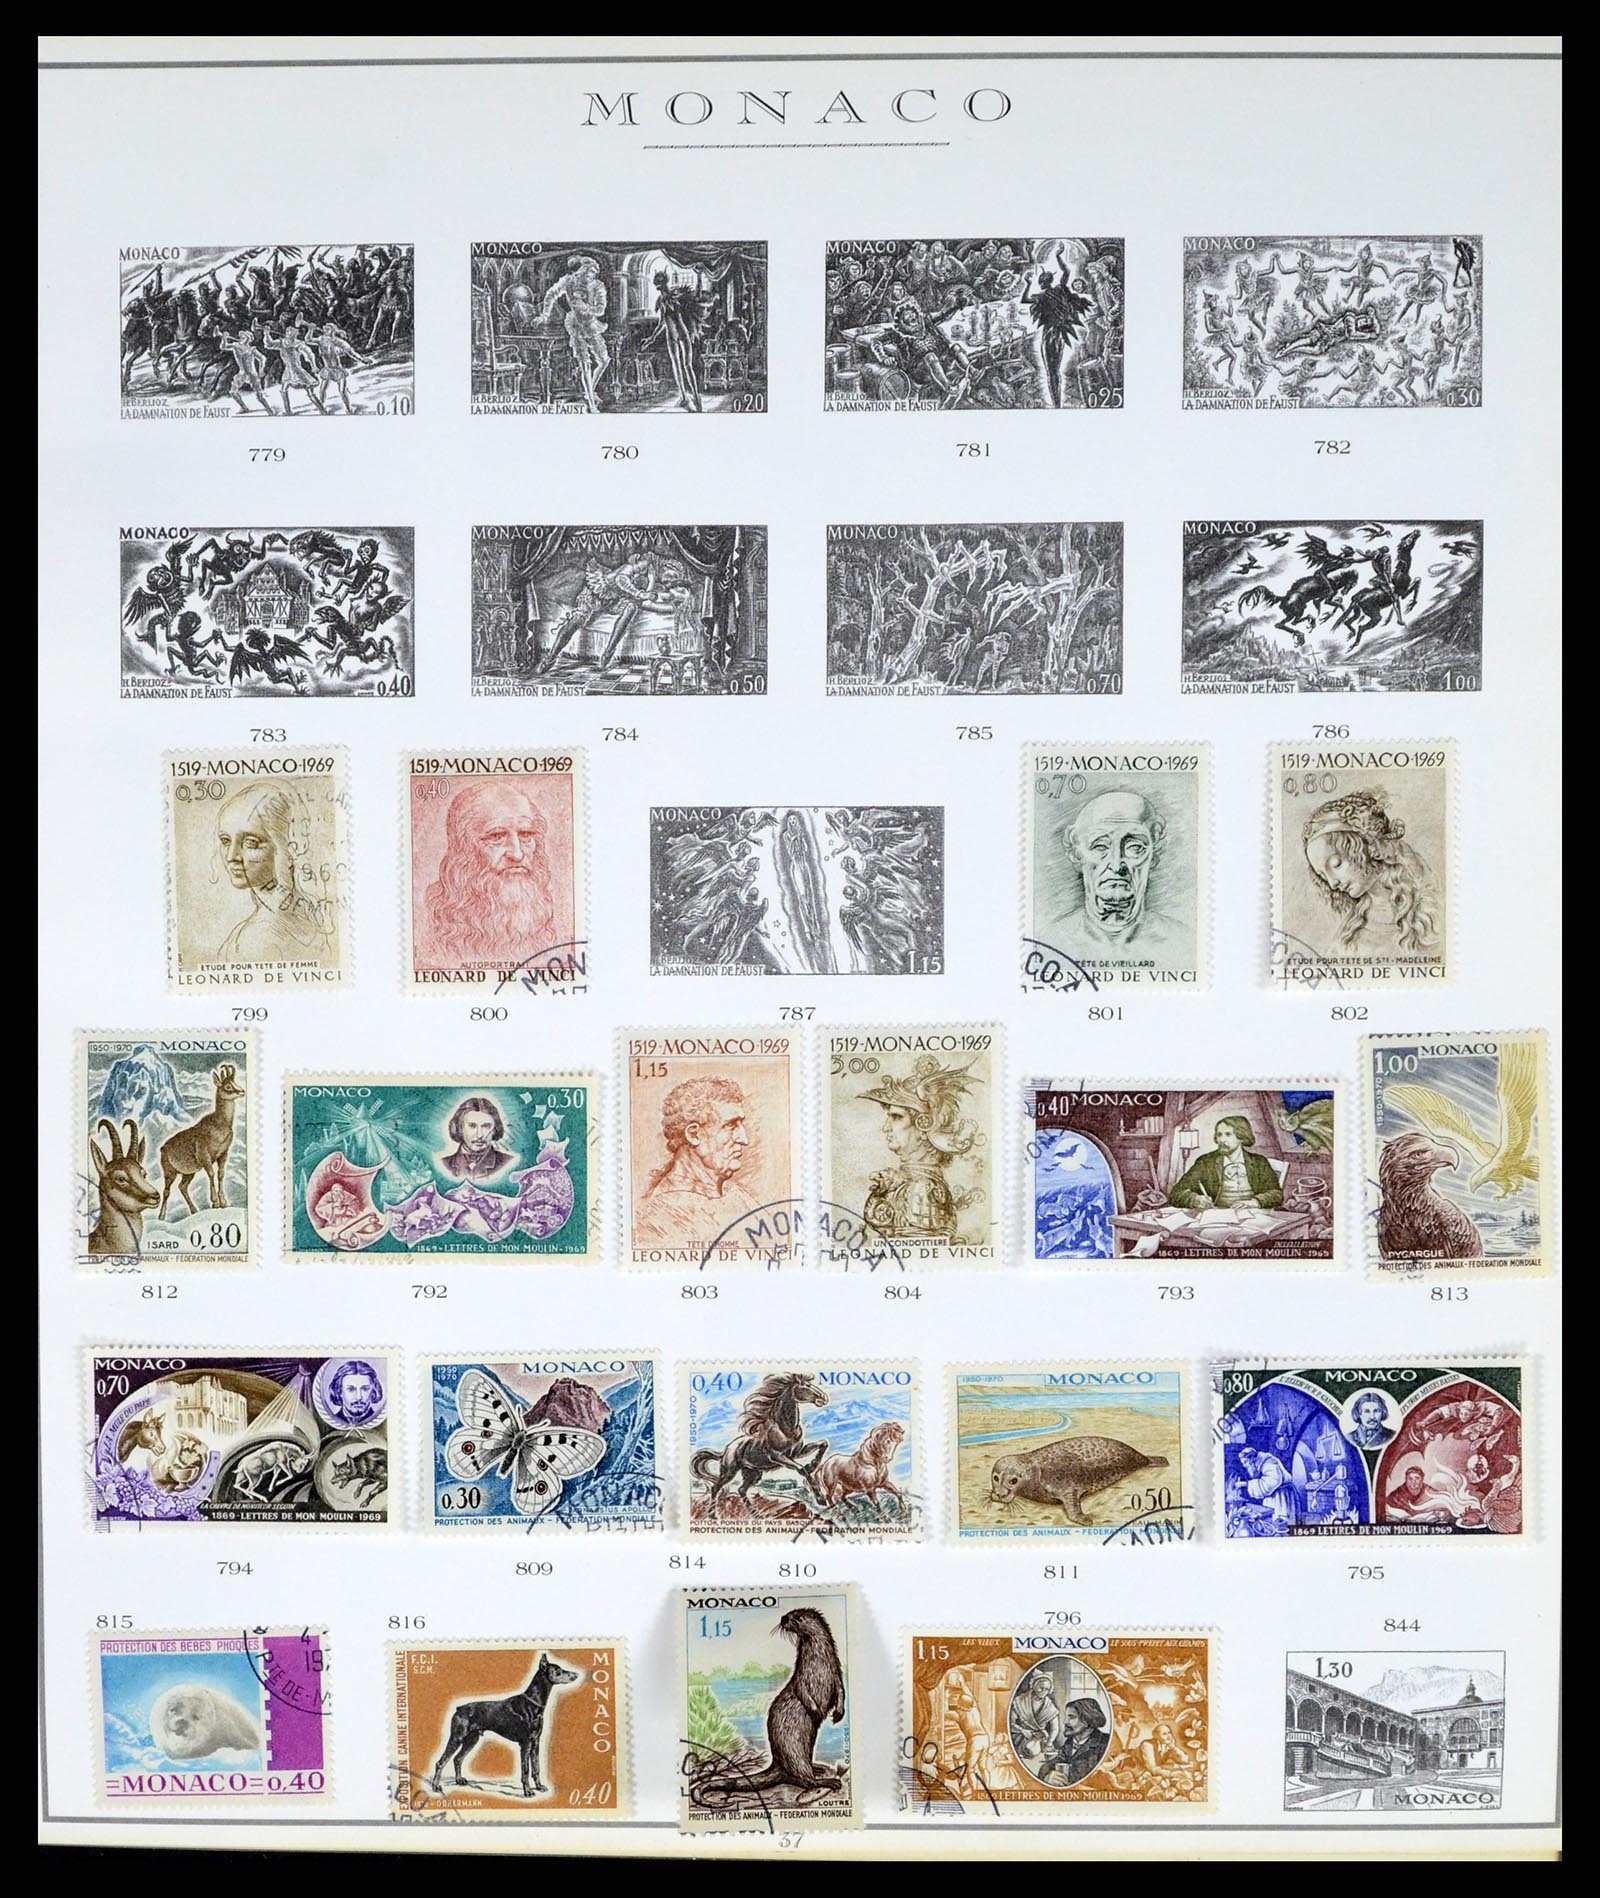 37437 072 - Stamp collection 37437 Monaco 1885-1996.